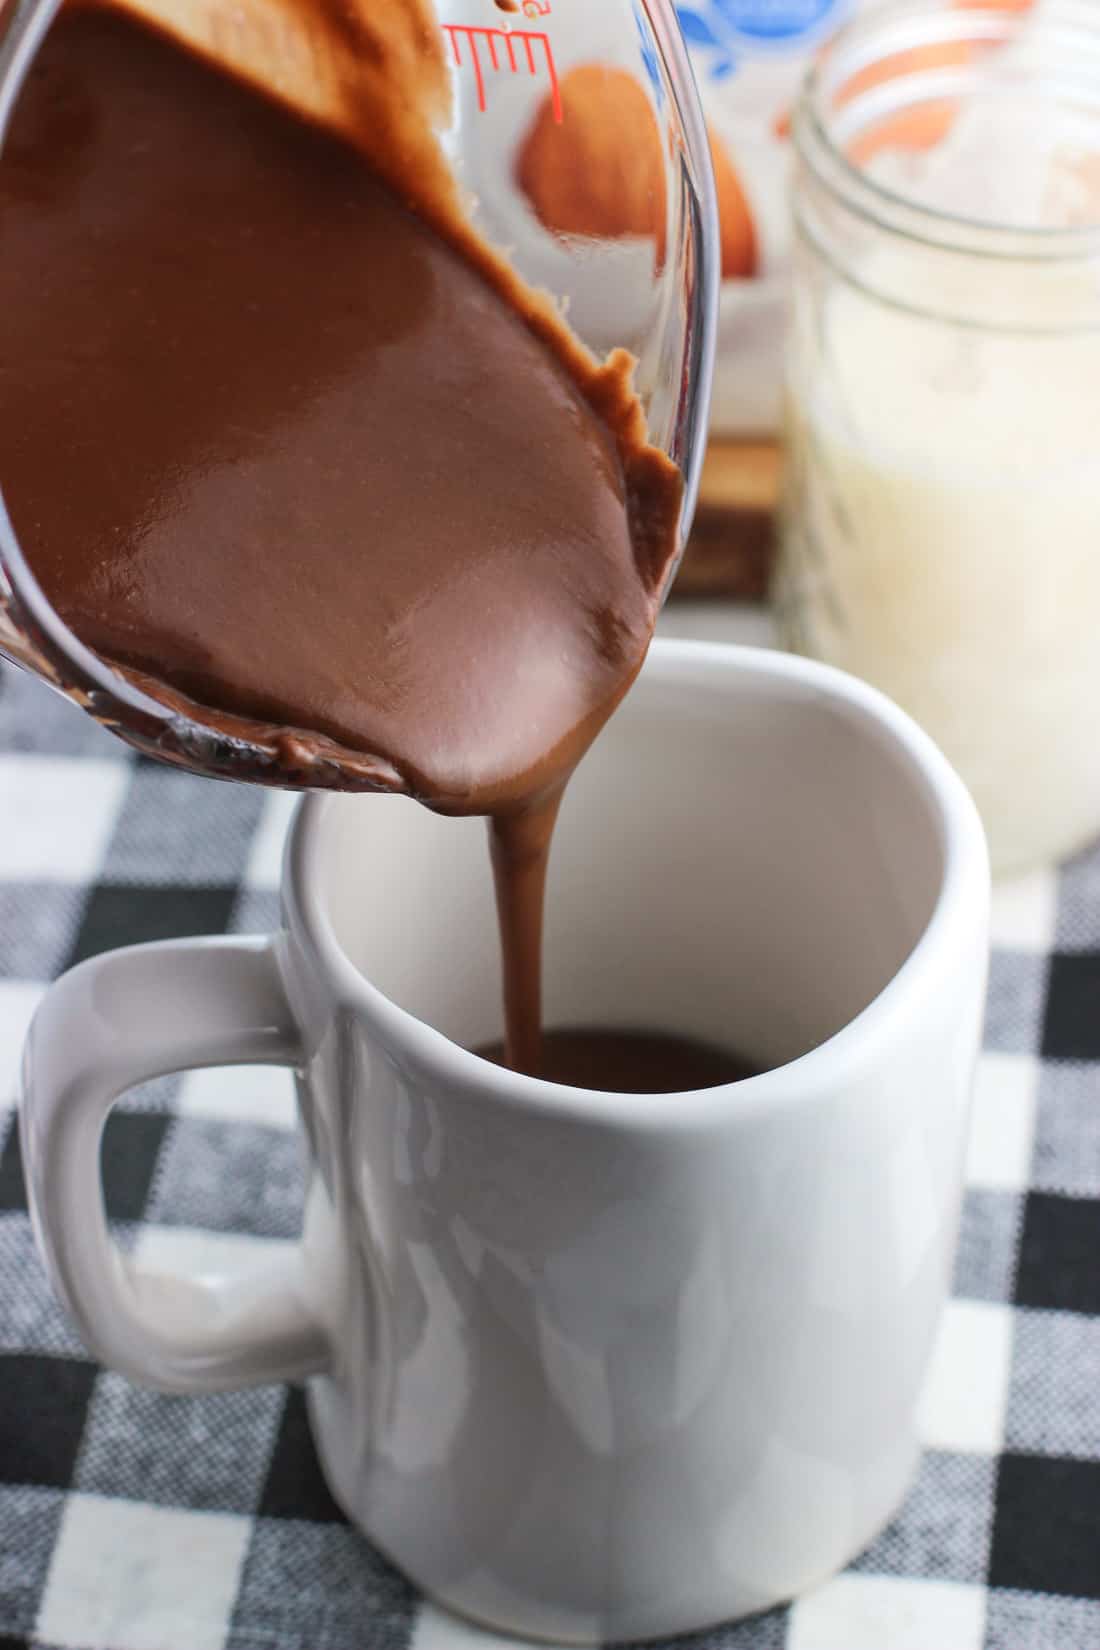 A thick hot chocolate mixture being poured into a ceramic mug.